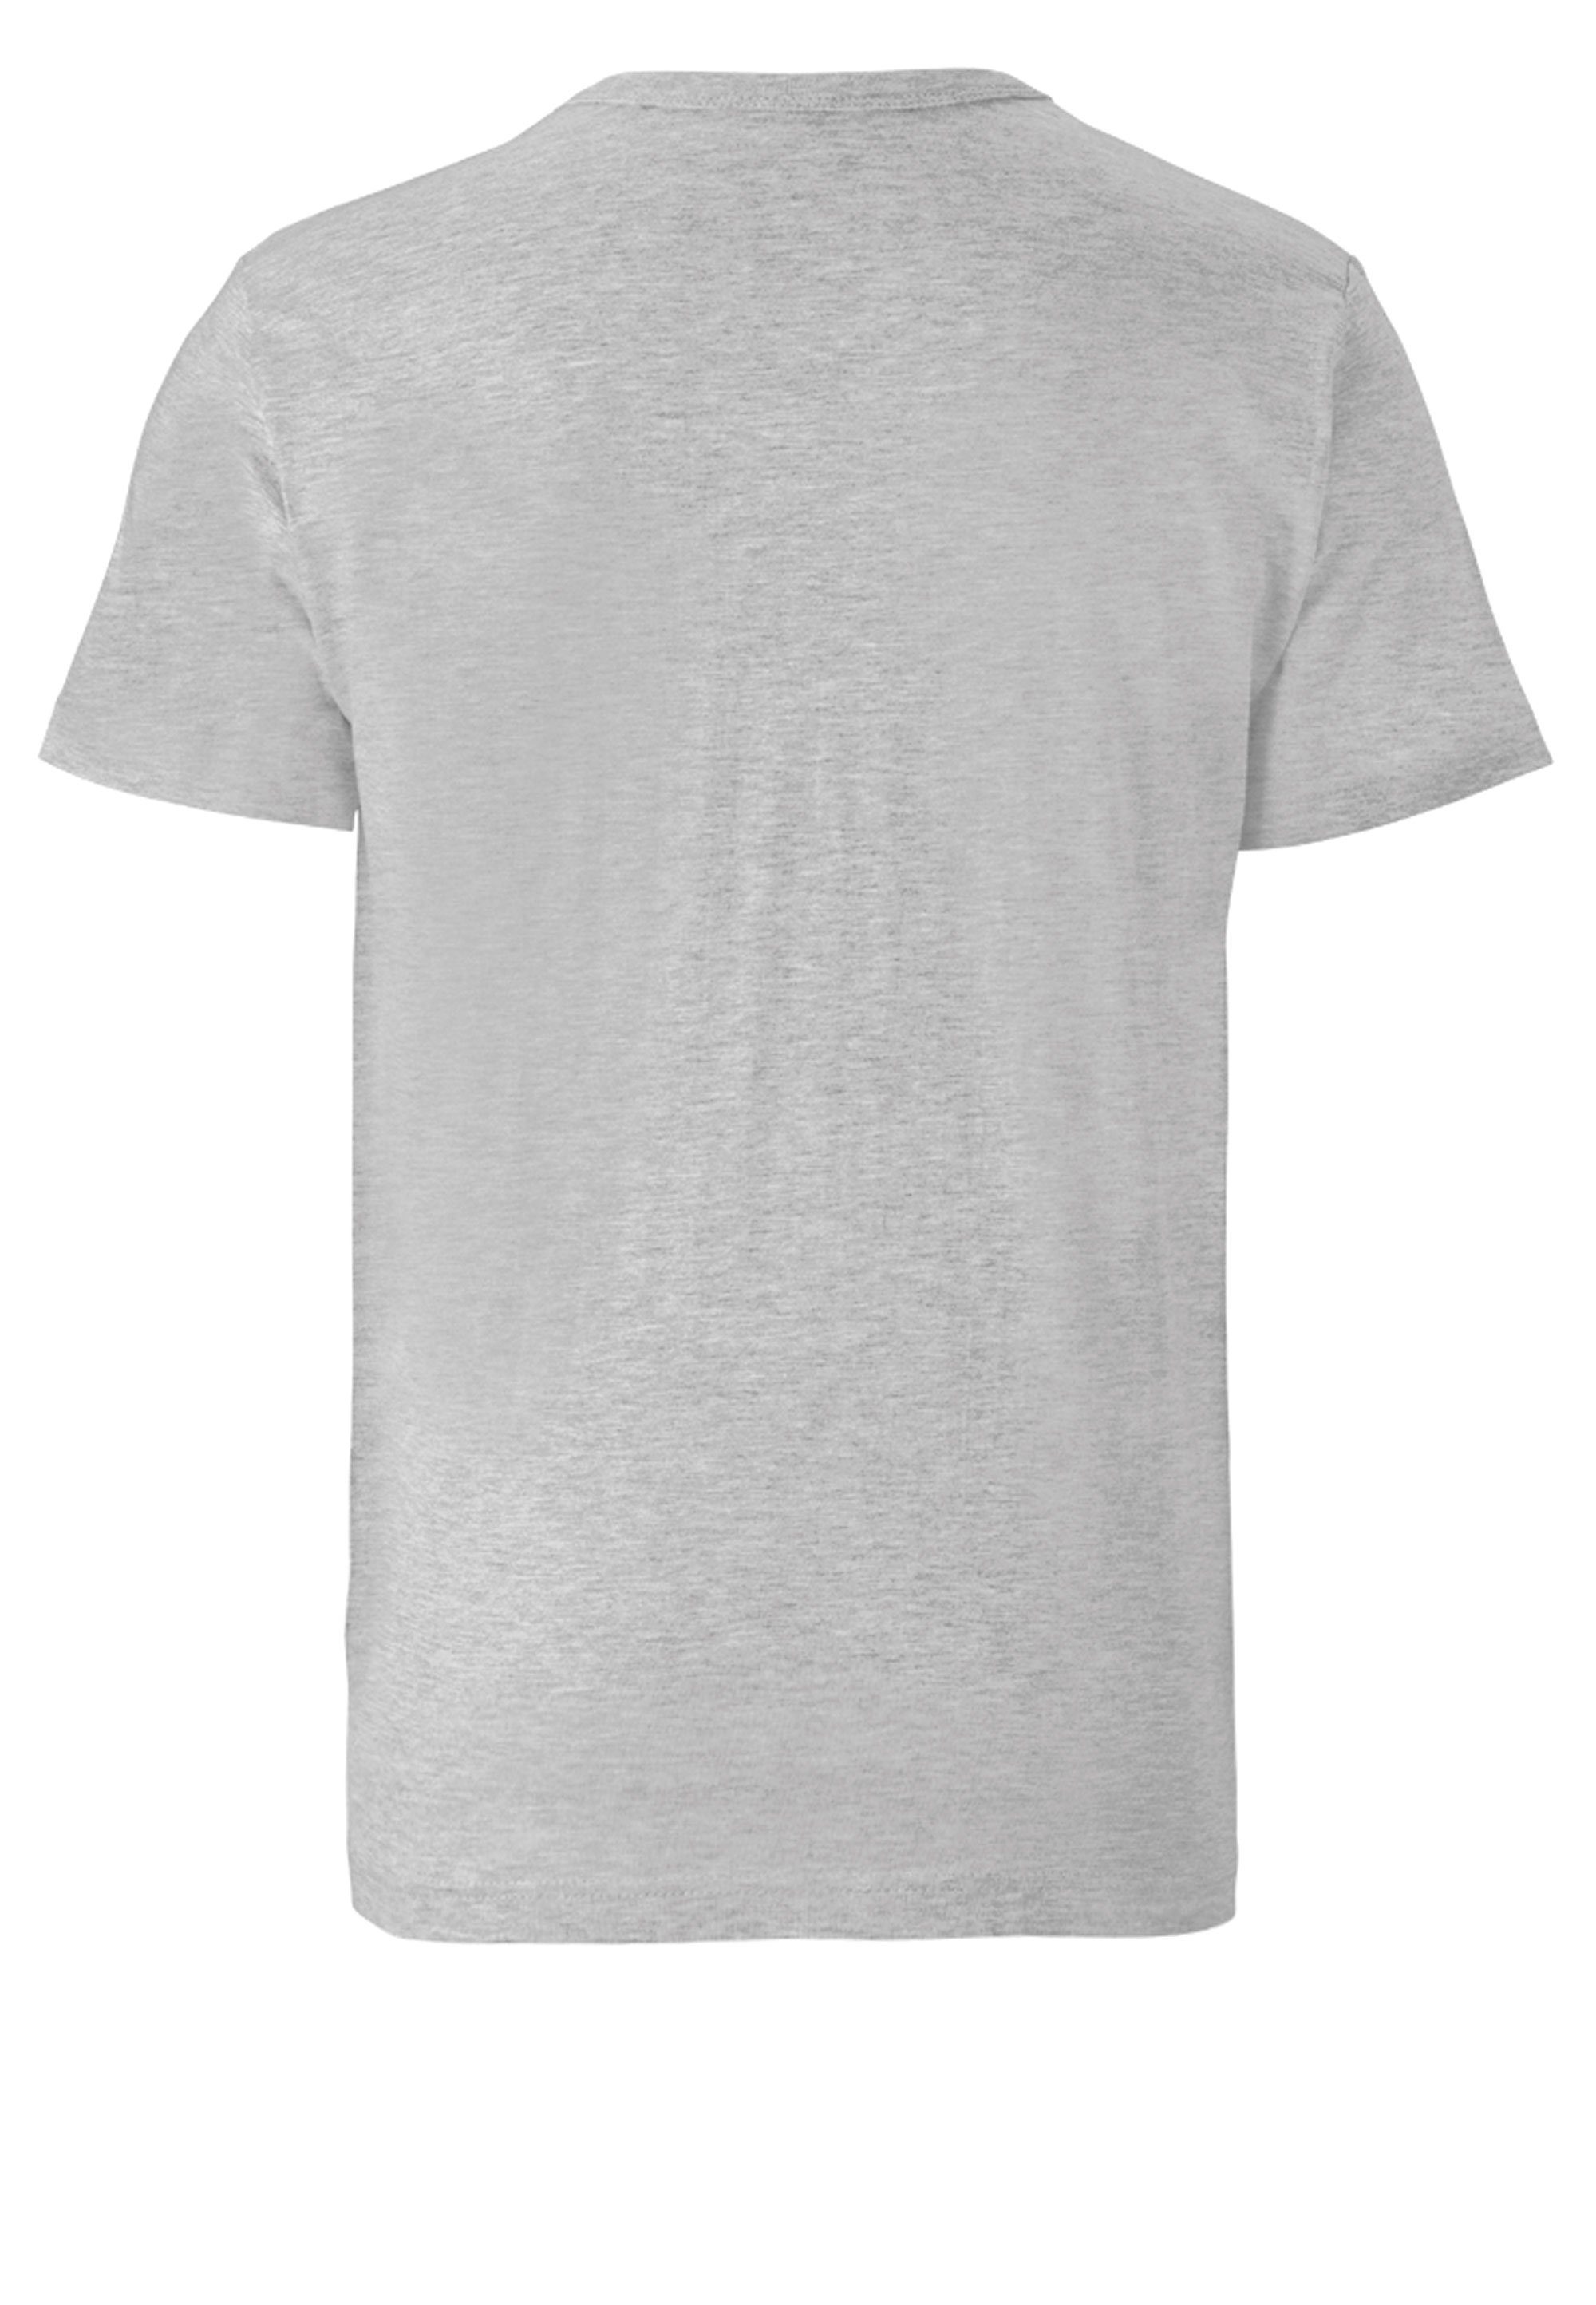 Krümelmonster T-Shirt Originalddesign Sesamstrasse mit - lizenziertem grau-meliert LOGOSHIRT